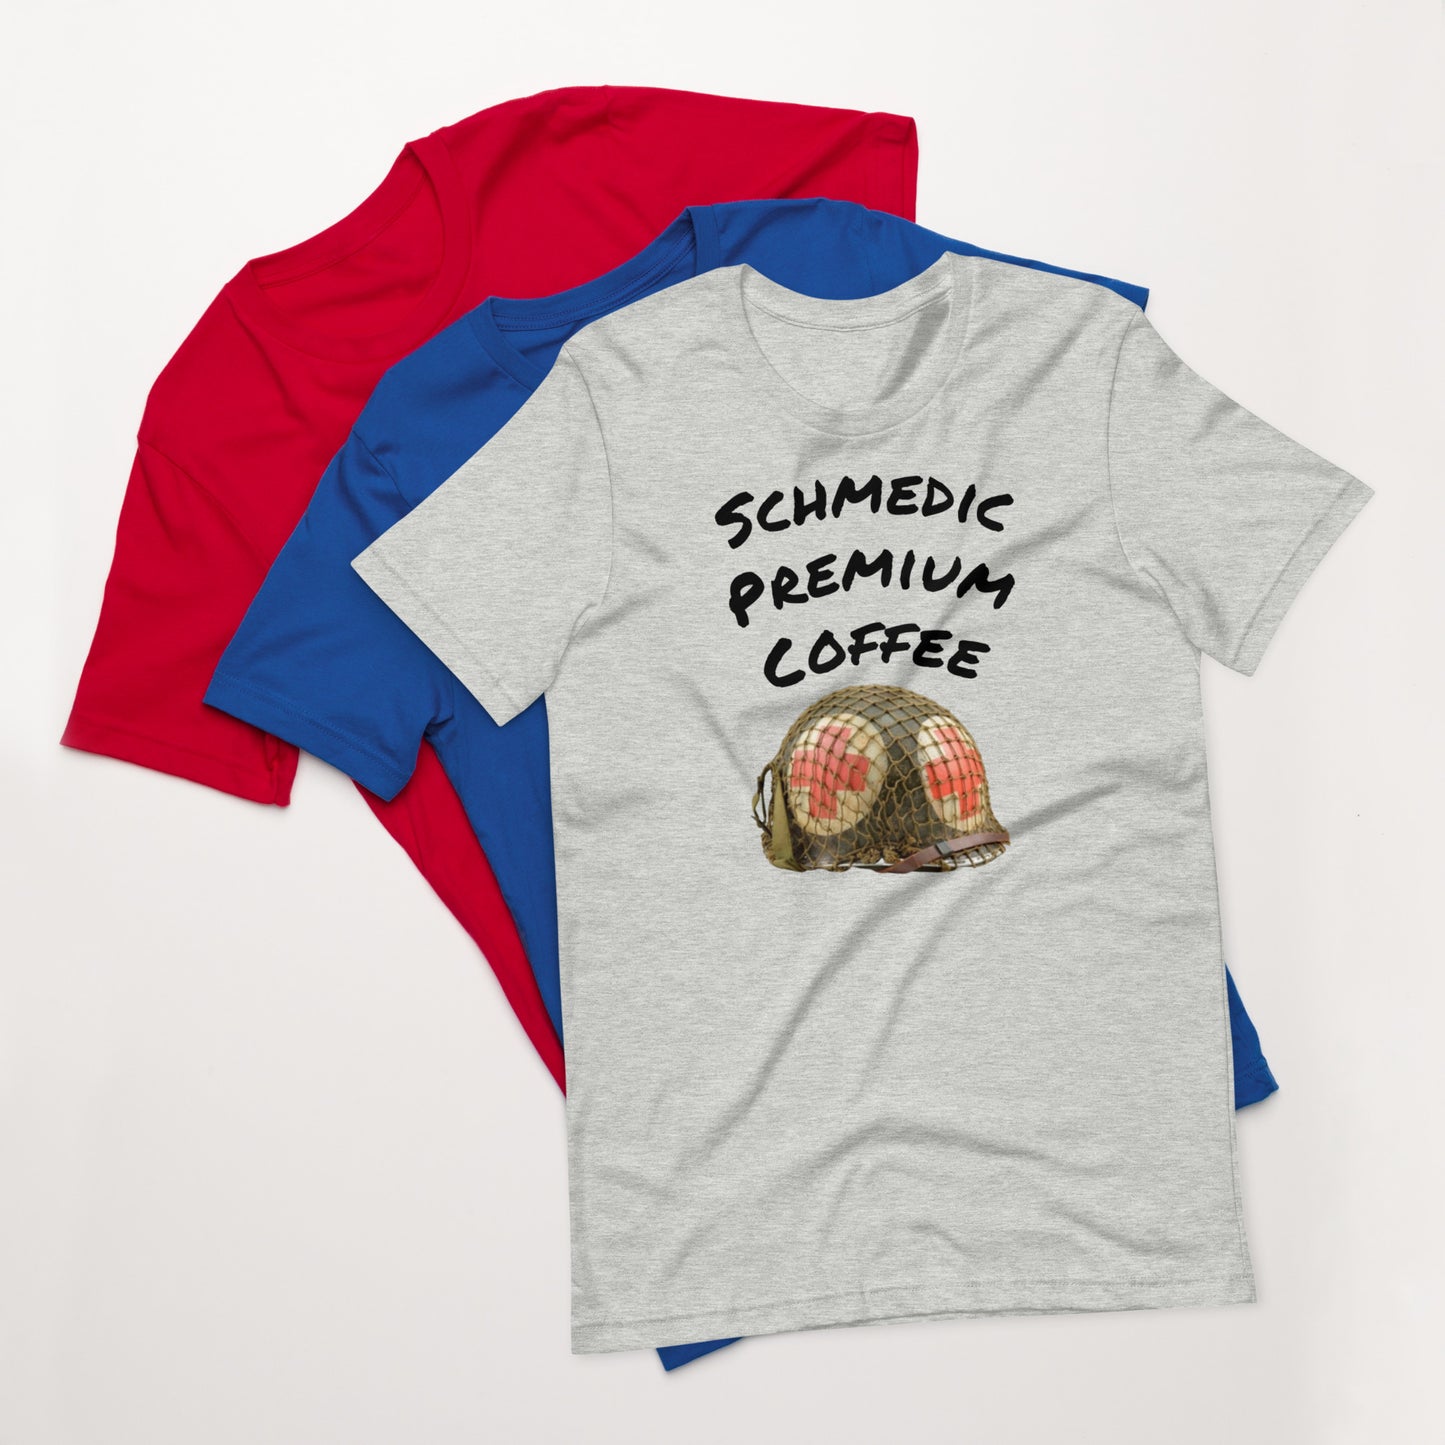 Schmedic Premium Coffee Unisex t-shirt